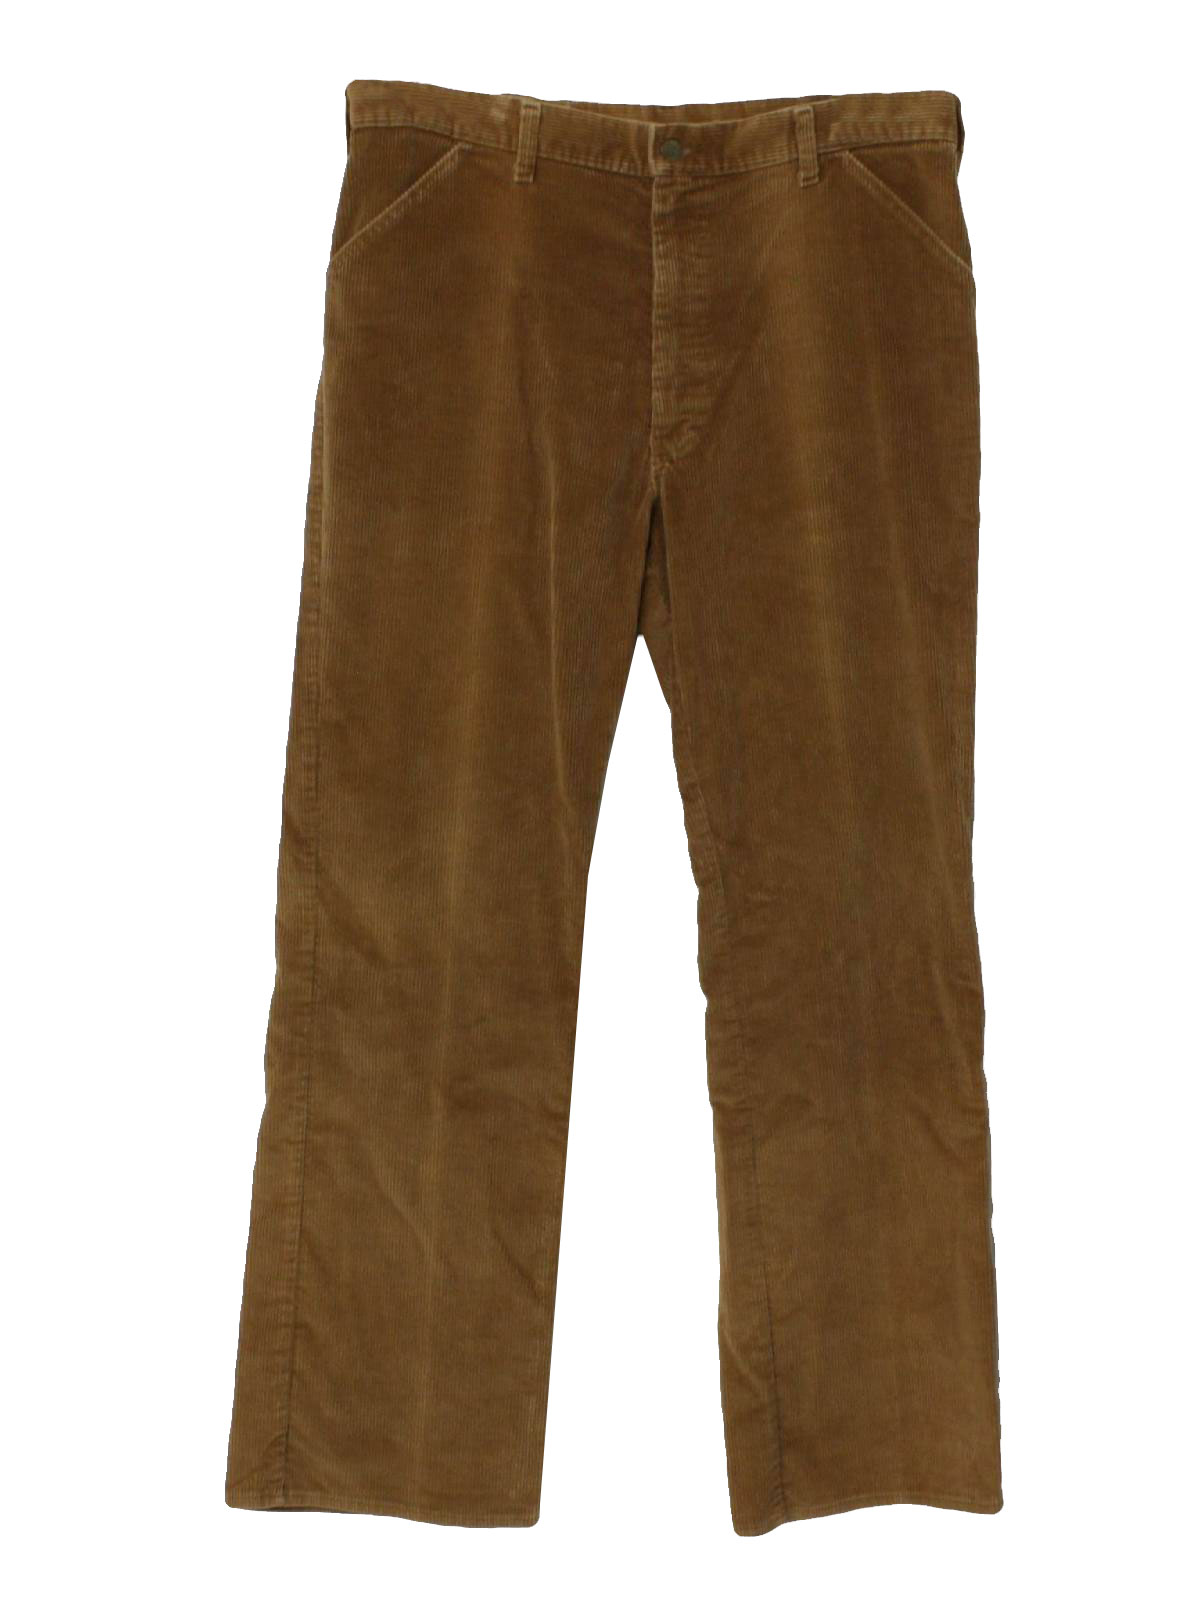 1970s Vintage Flared Pants / Flares: 70s -Lee- Mens honey tan cotton ...